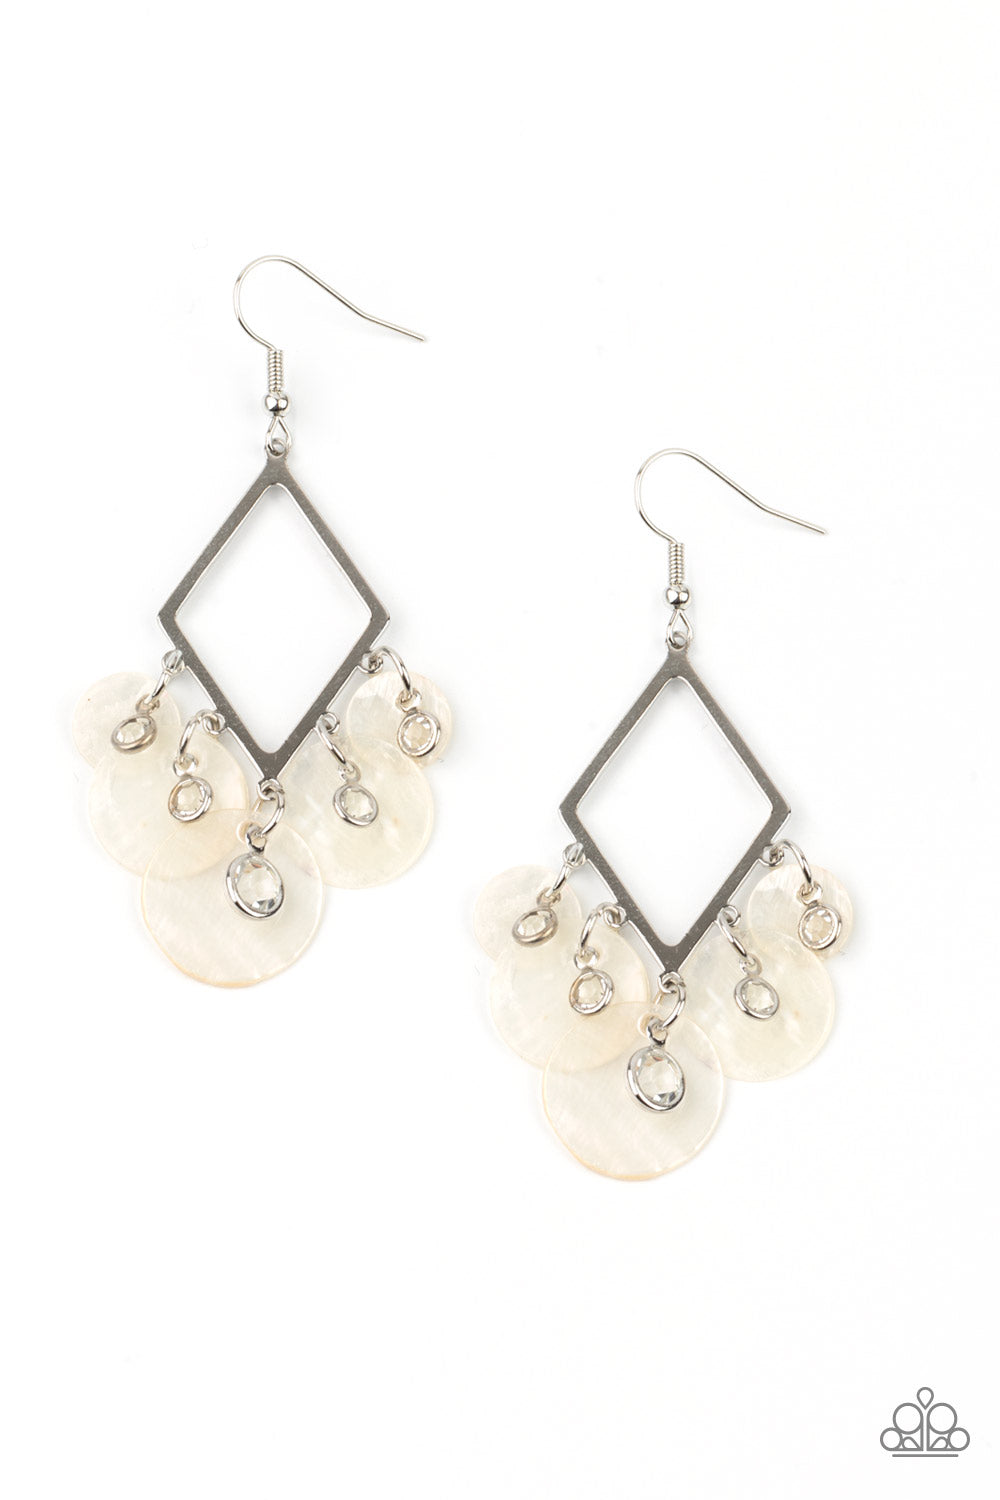 Pomp And Circumstance - White Iridescent Rhinestone Earrings - Paparazzi Accessories - GlaMarous Titi Jewels